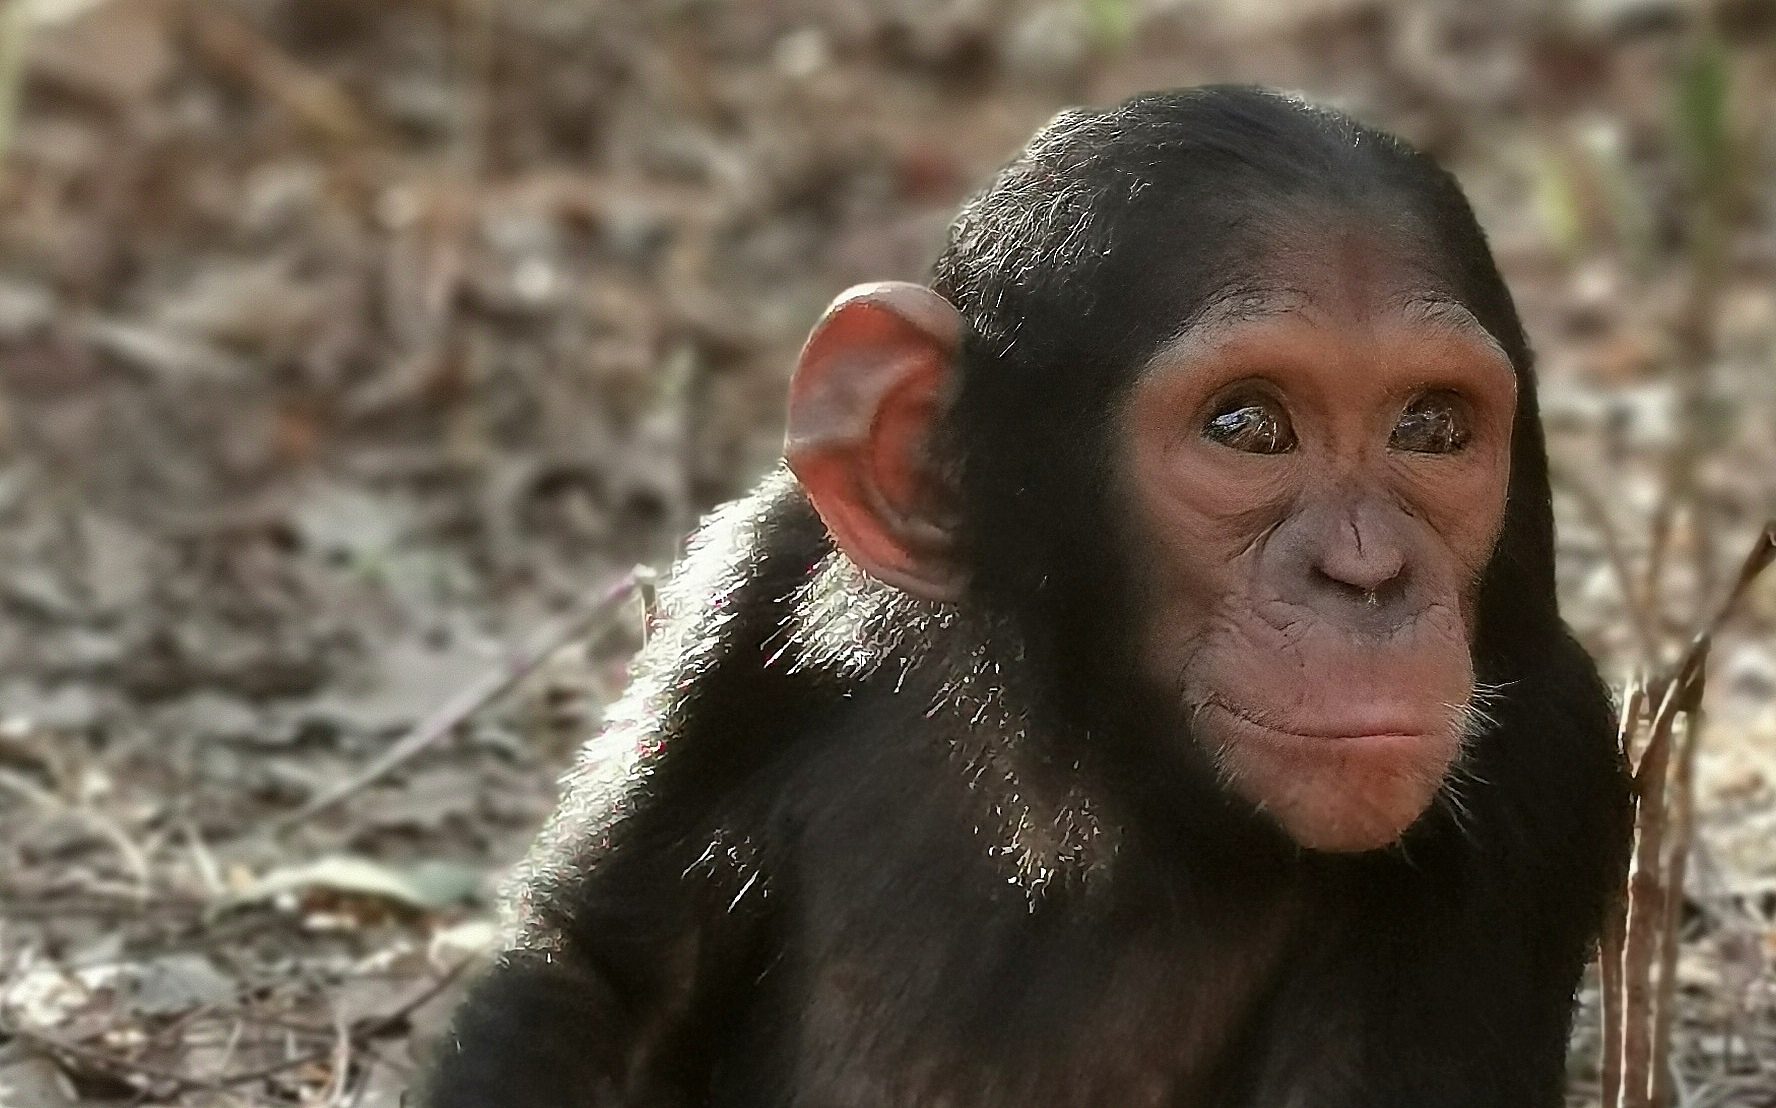 J.A.C.K., a Refuge Centre for seized chimpanzee babies